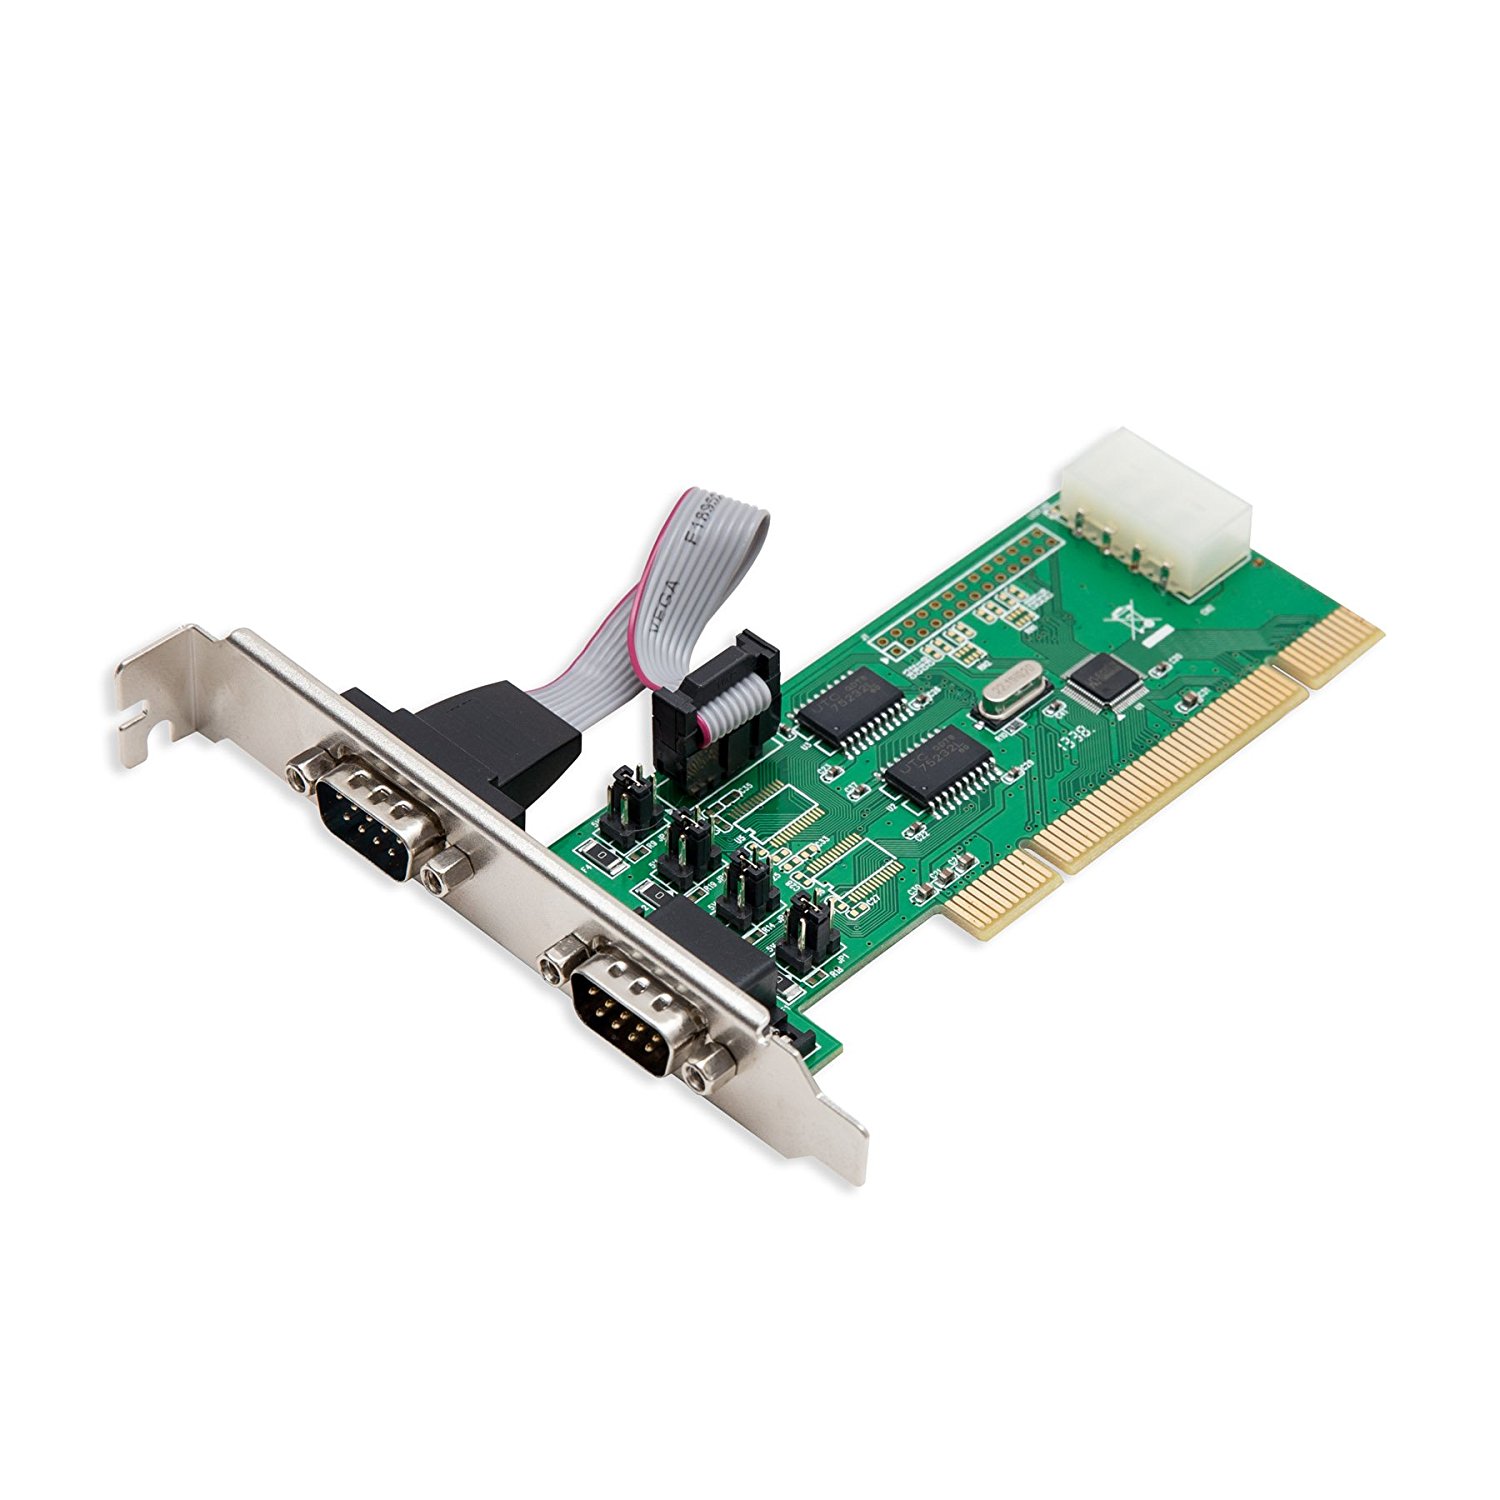 Amazon.com: Syba SD-PCI15039 2 Port DB9 RS-232 Serial PCI Controller ...